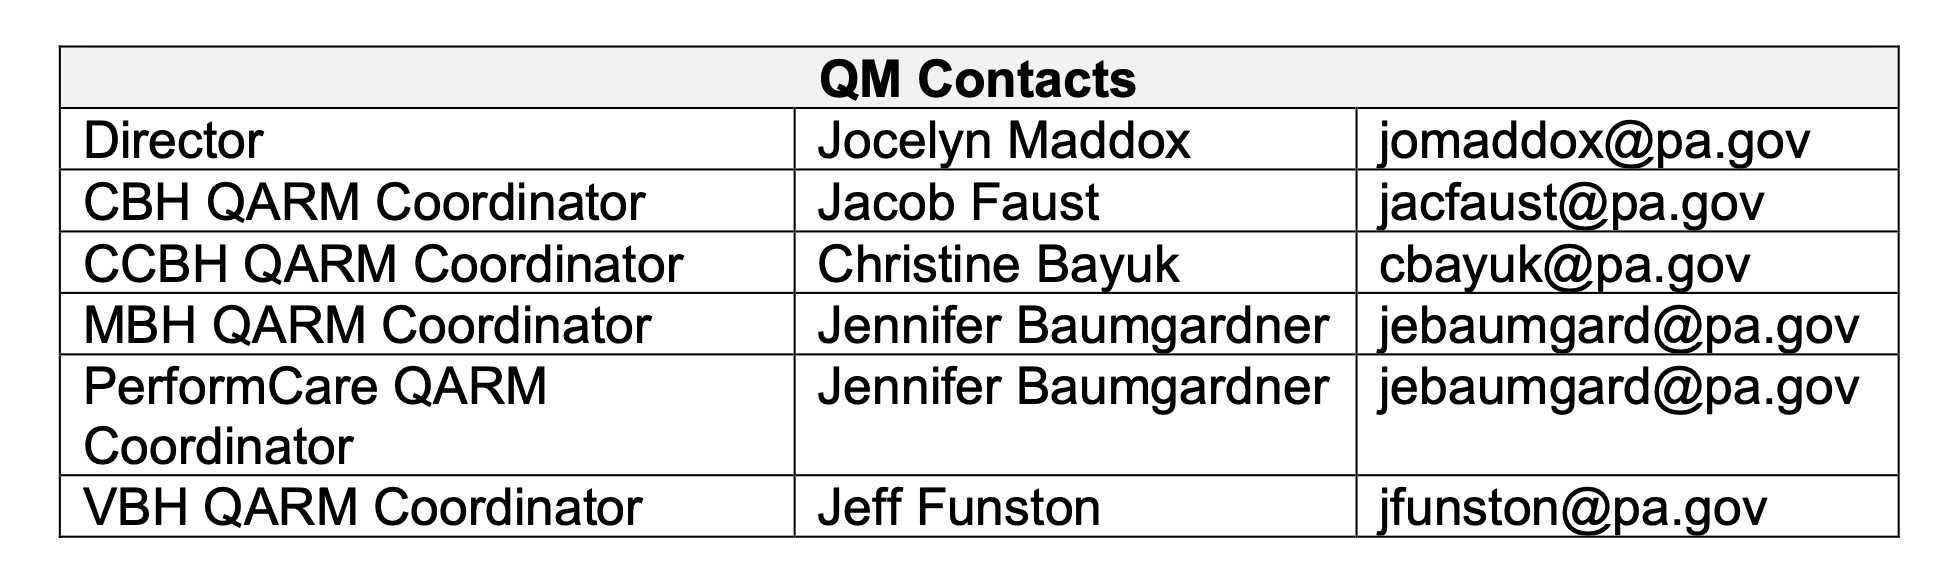 QM Contacts.png